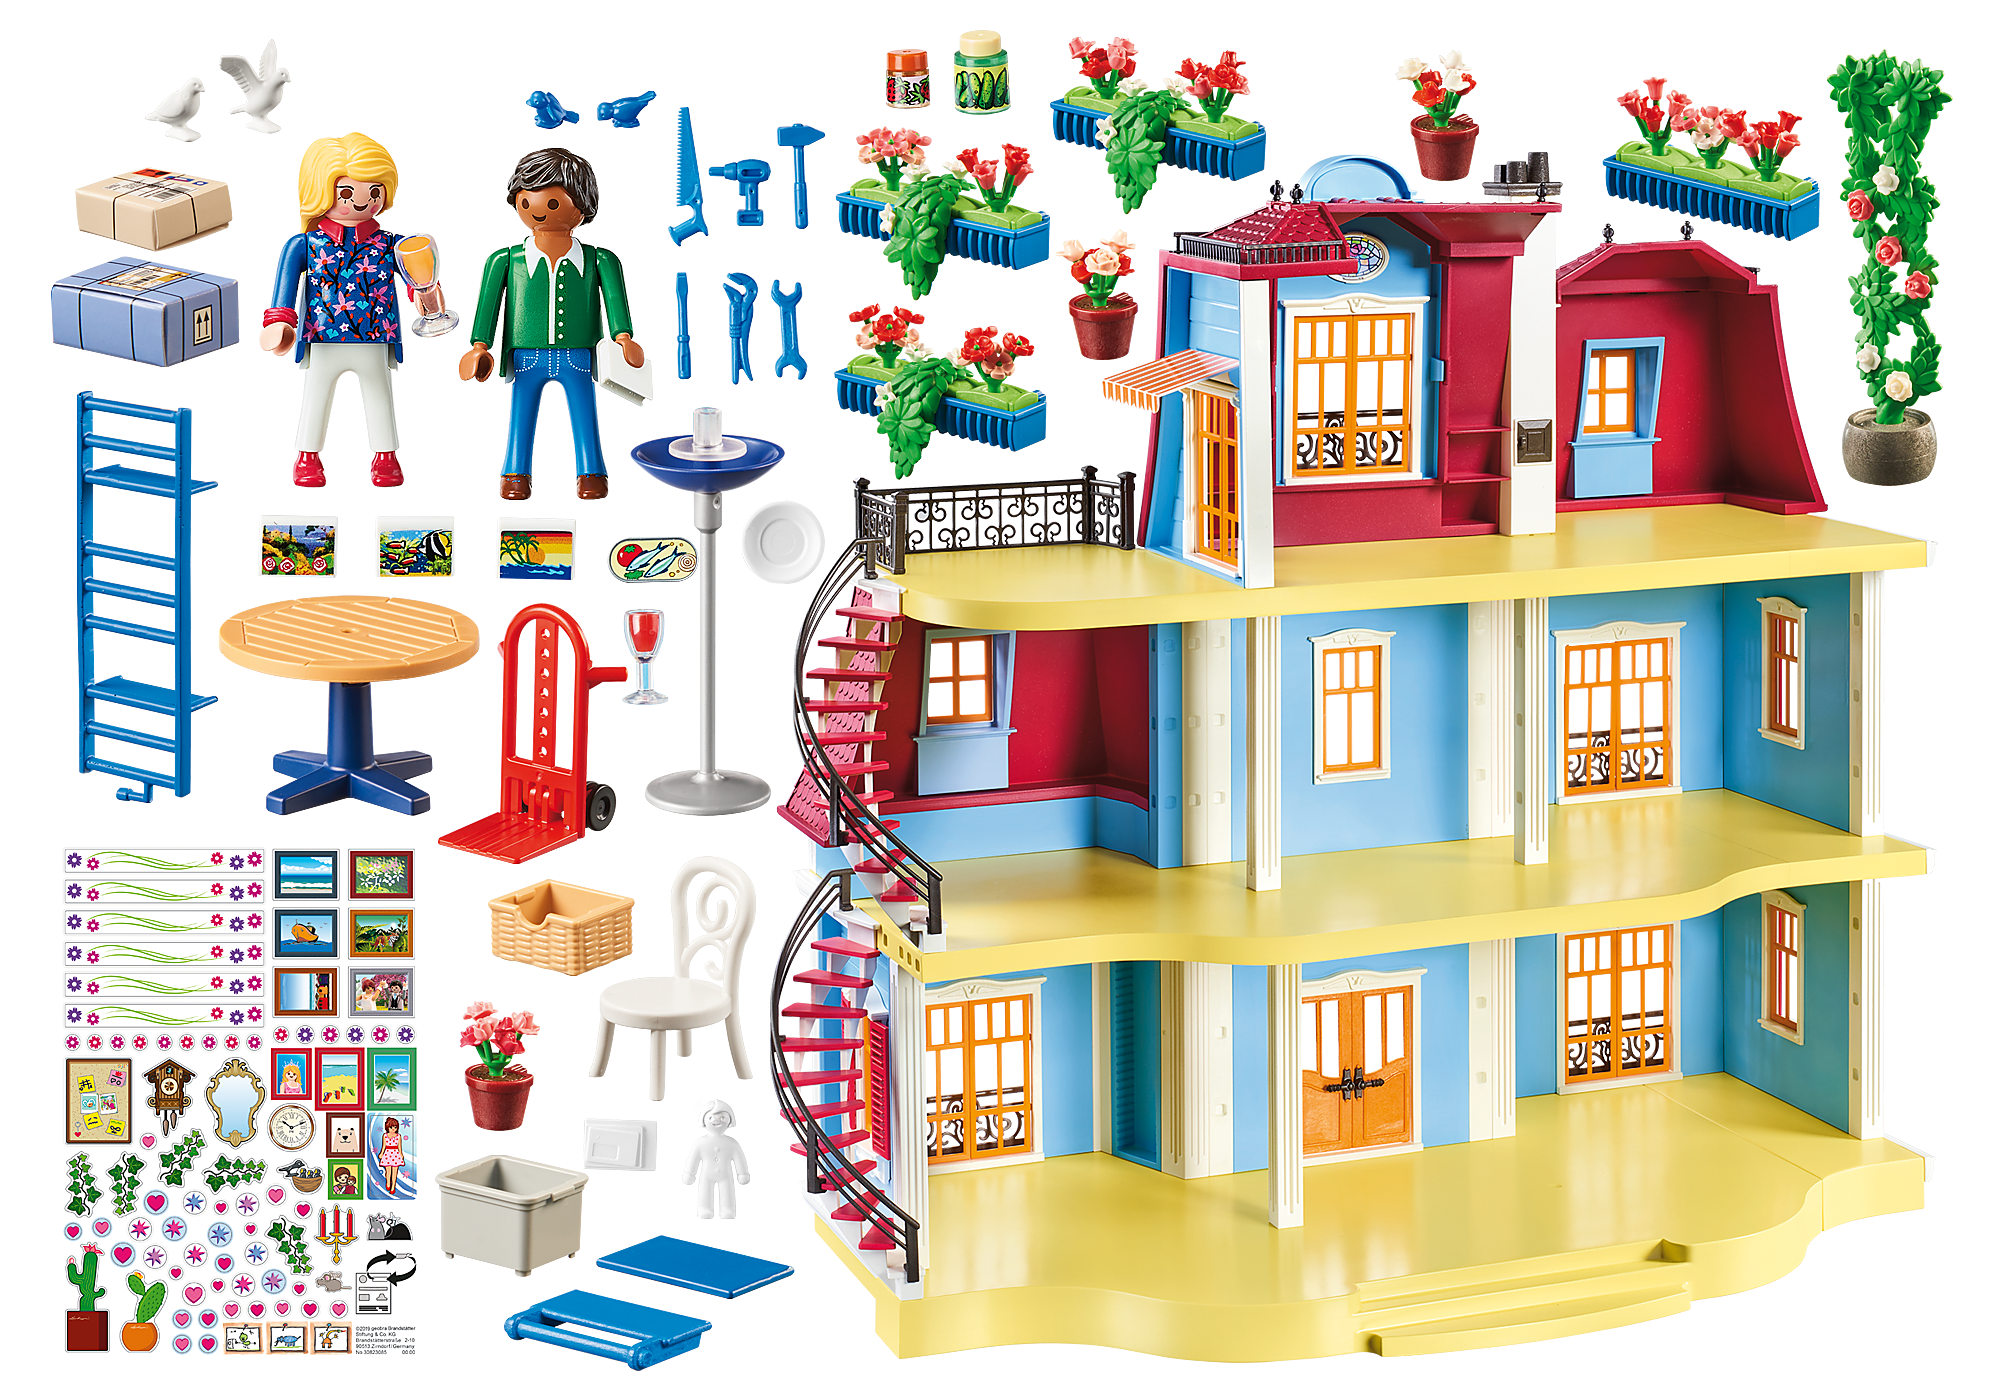 Playmobil Dollhouse Grande maison traditionnelle